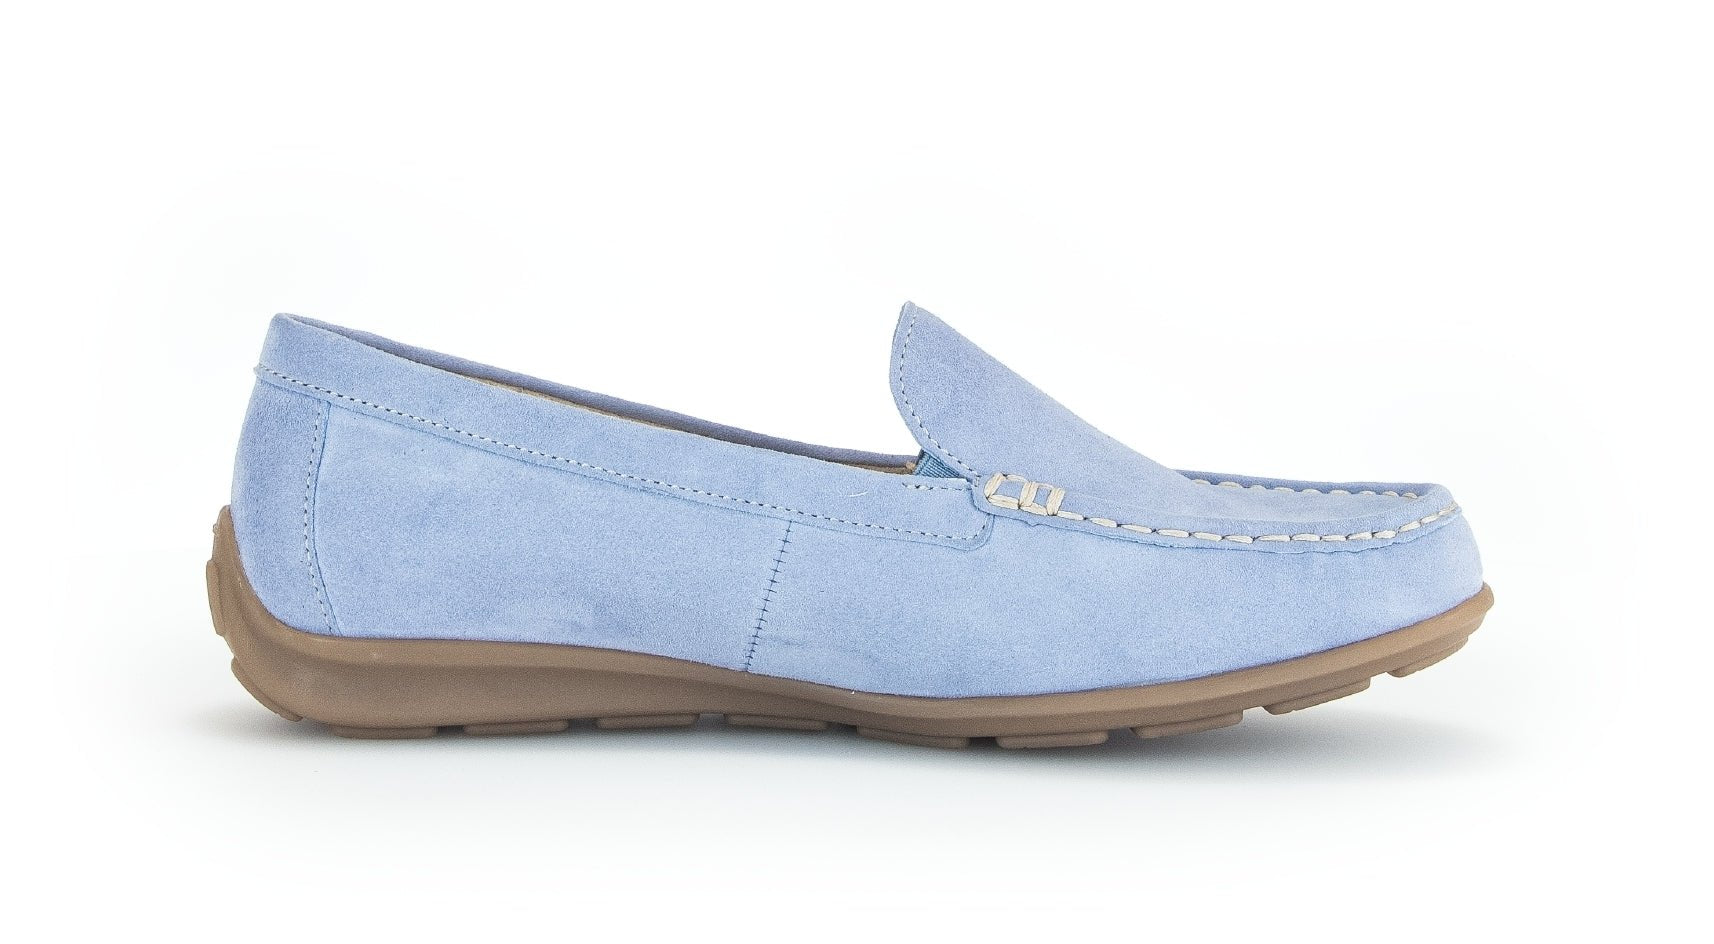 '42.440.26' women's loafer - blue - Chaplinshoes'42.440.26' women's loafer - blueGabor